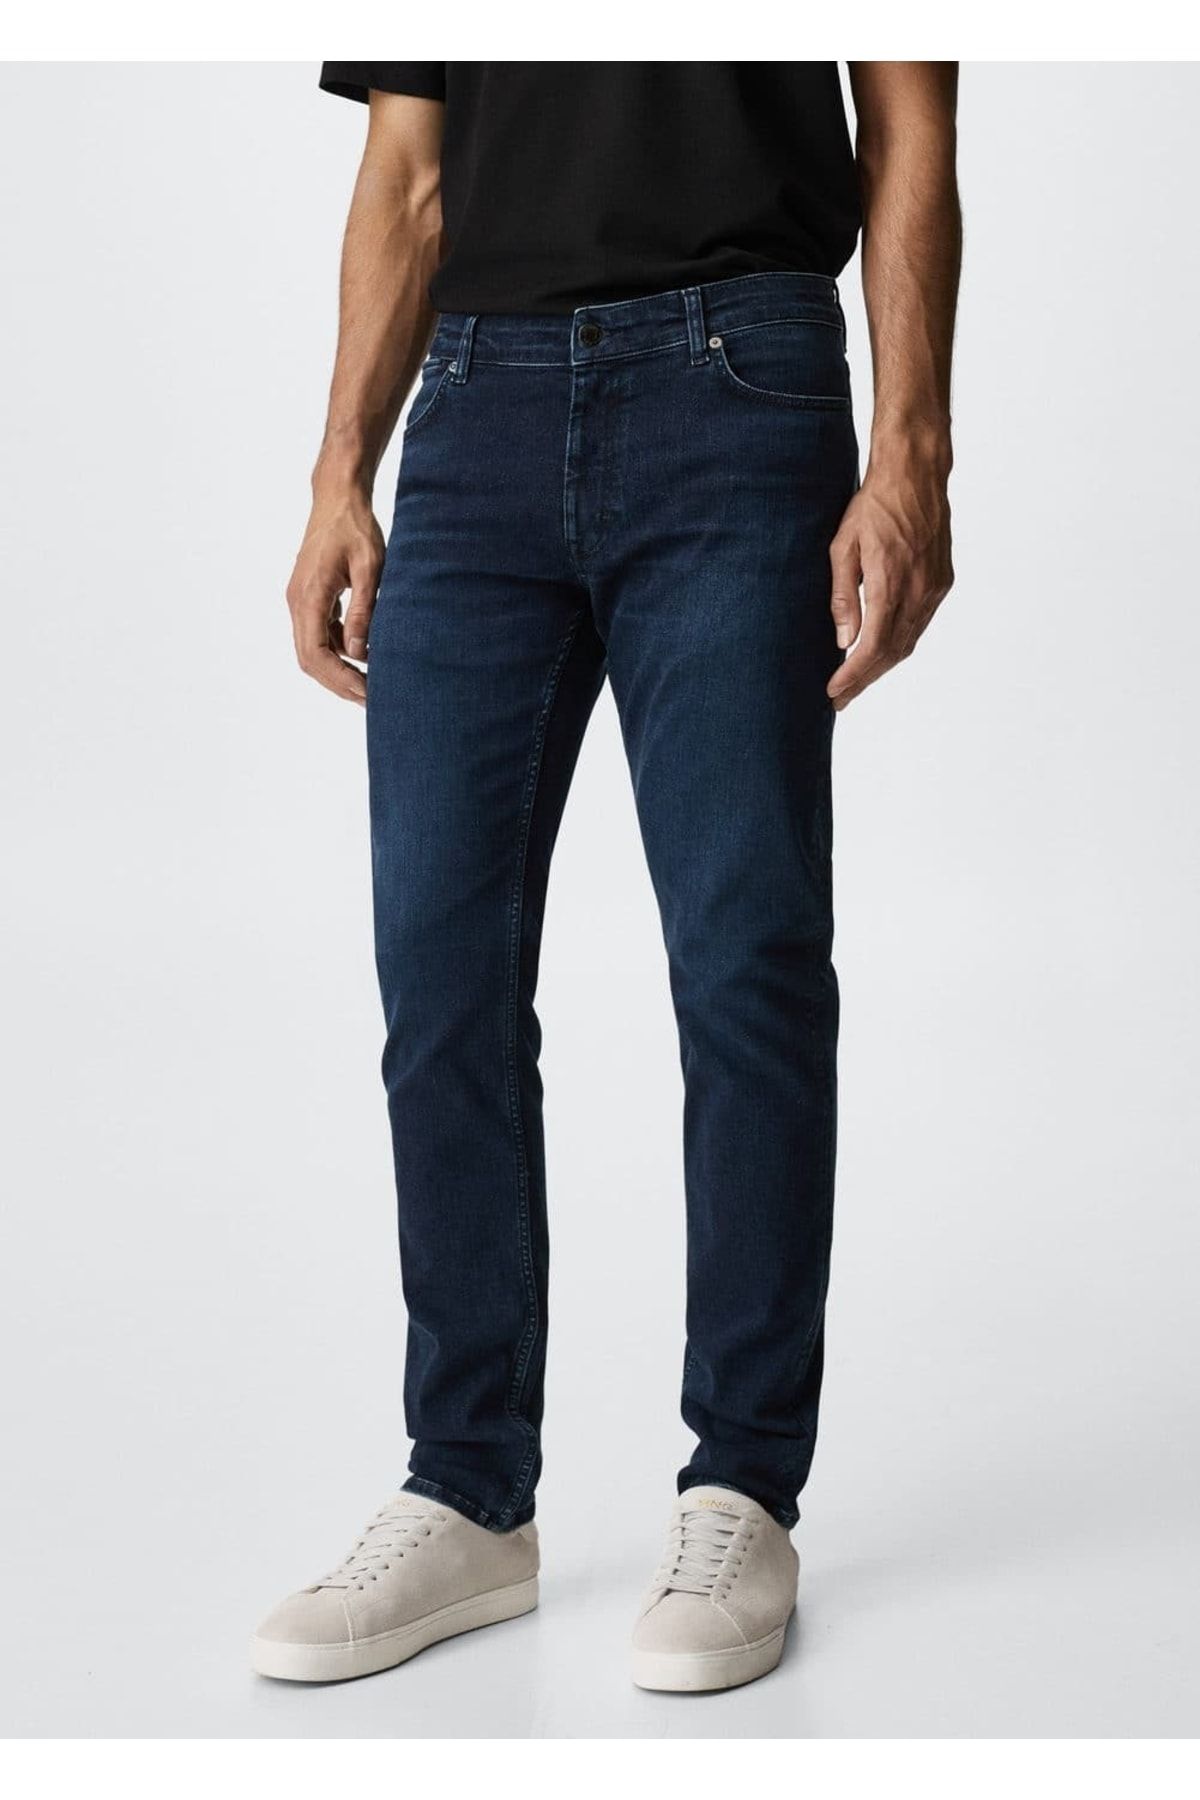 Slim fit ultra soft touch patrick jeans - Men